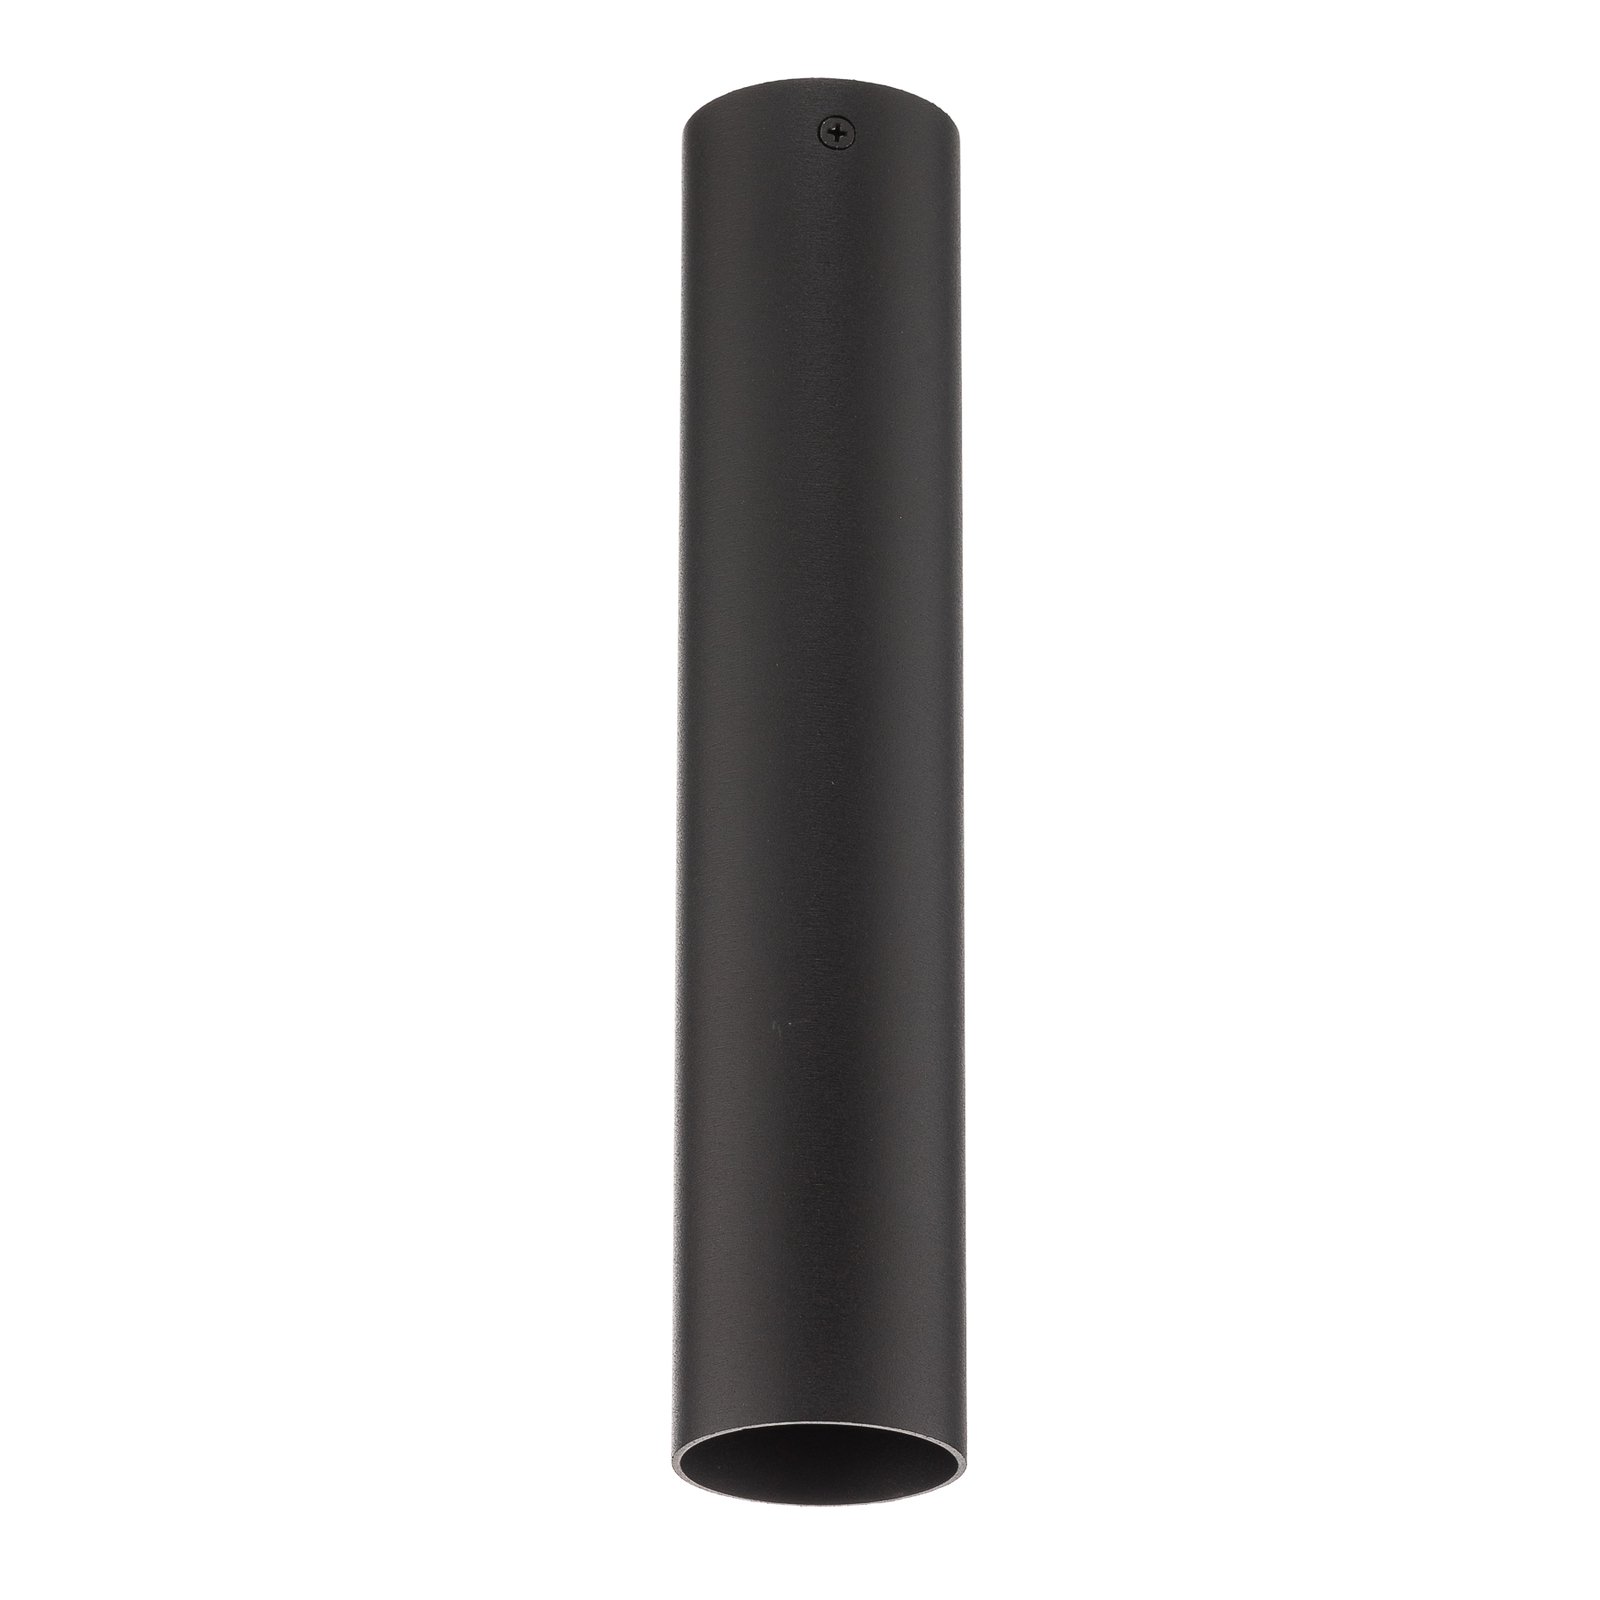 Plafonnier Tube forme cylindrique, noir